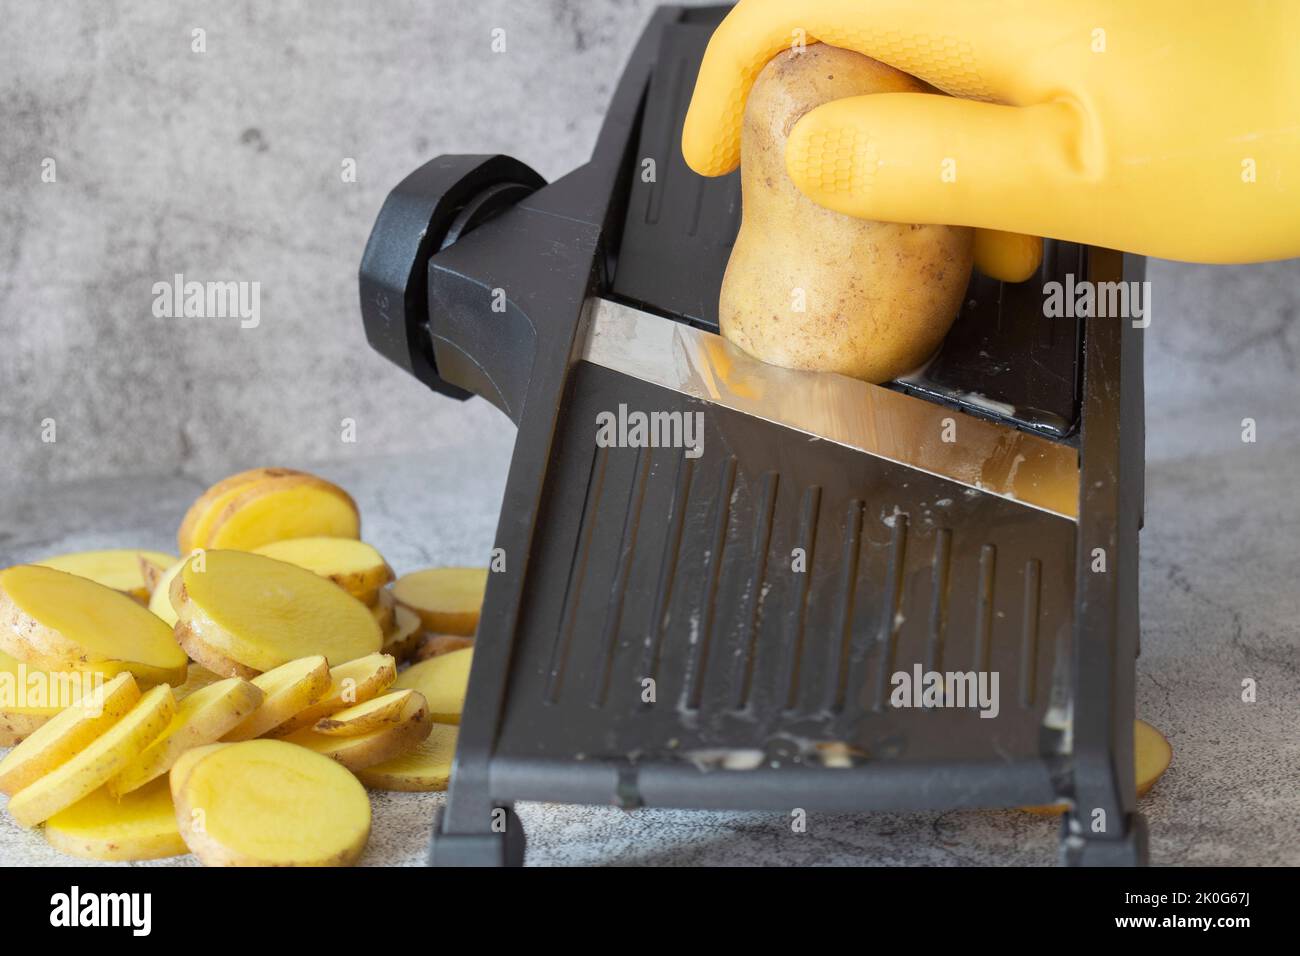 https://c8.alamy.com/comp/2K0G67J/person-slicing-potato-on-a-kitchen-mandolin-cutter-on-a-concrete-background-2K0G67J.jpg